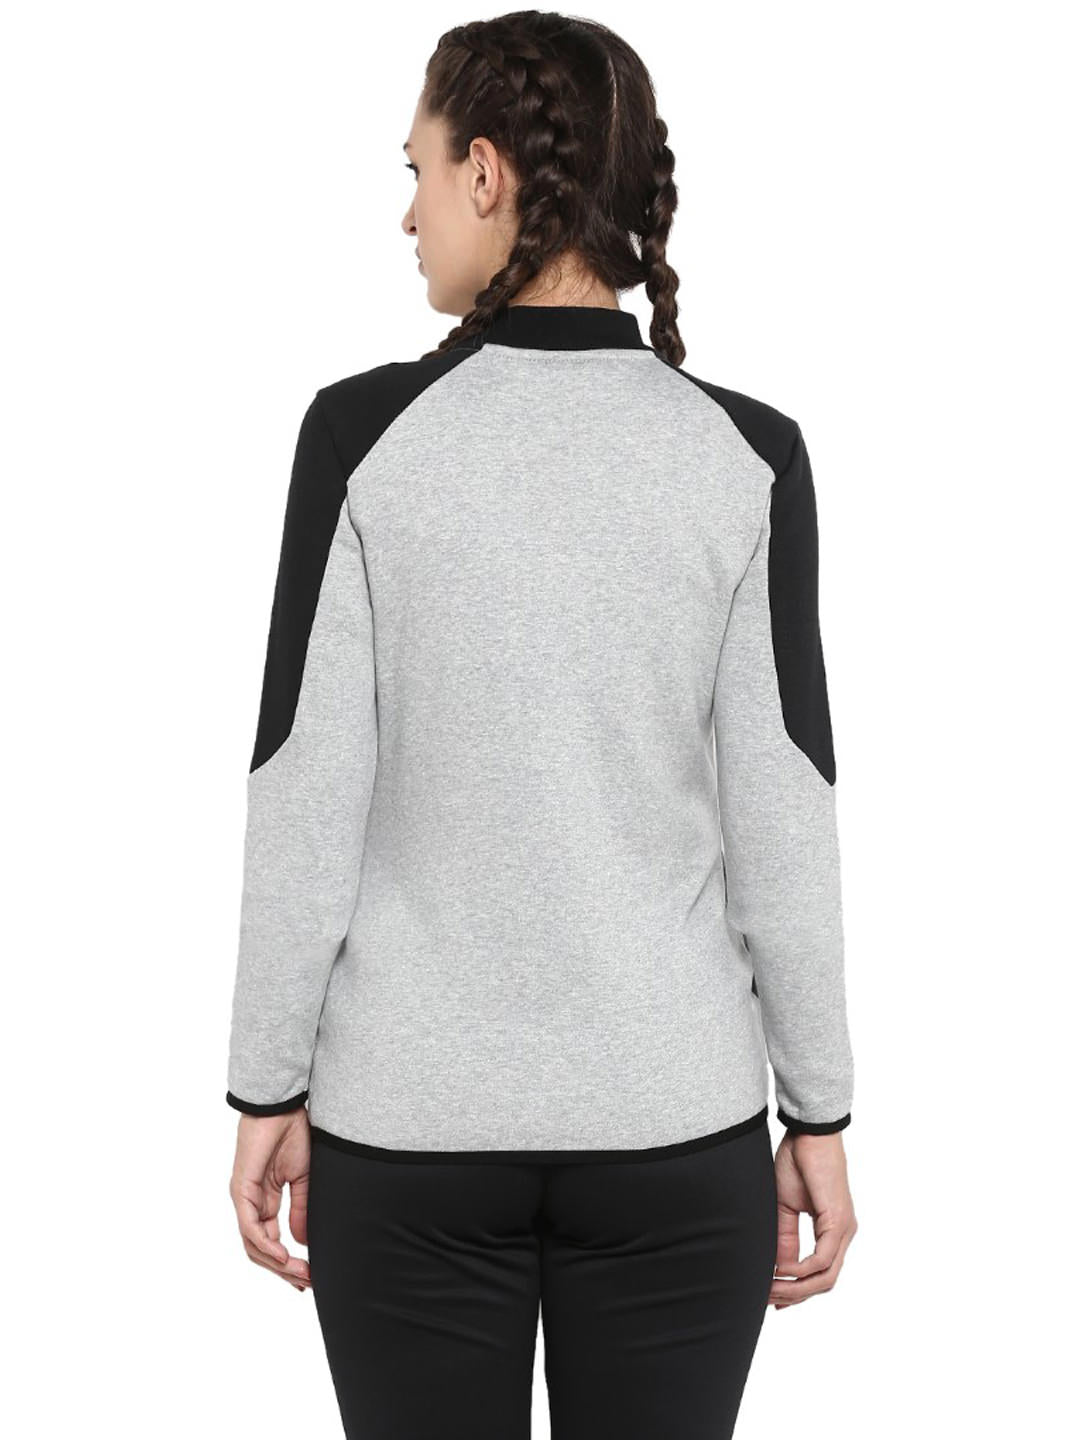 Alcis Women Solid Grey Melange Jacket